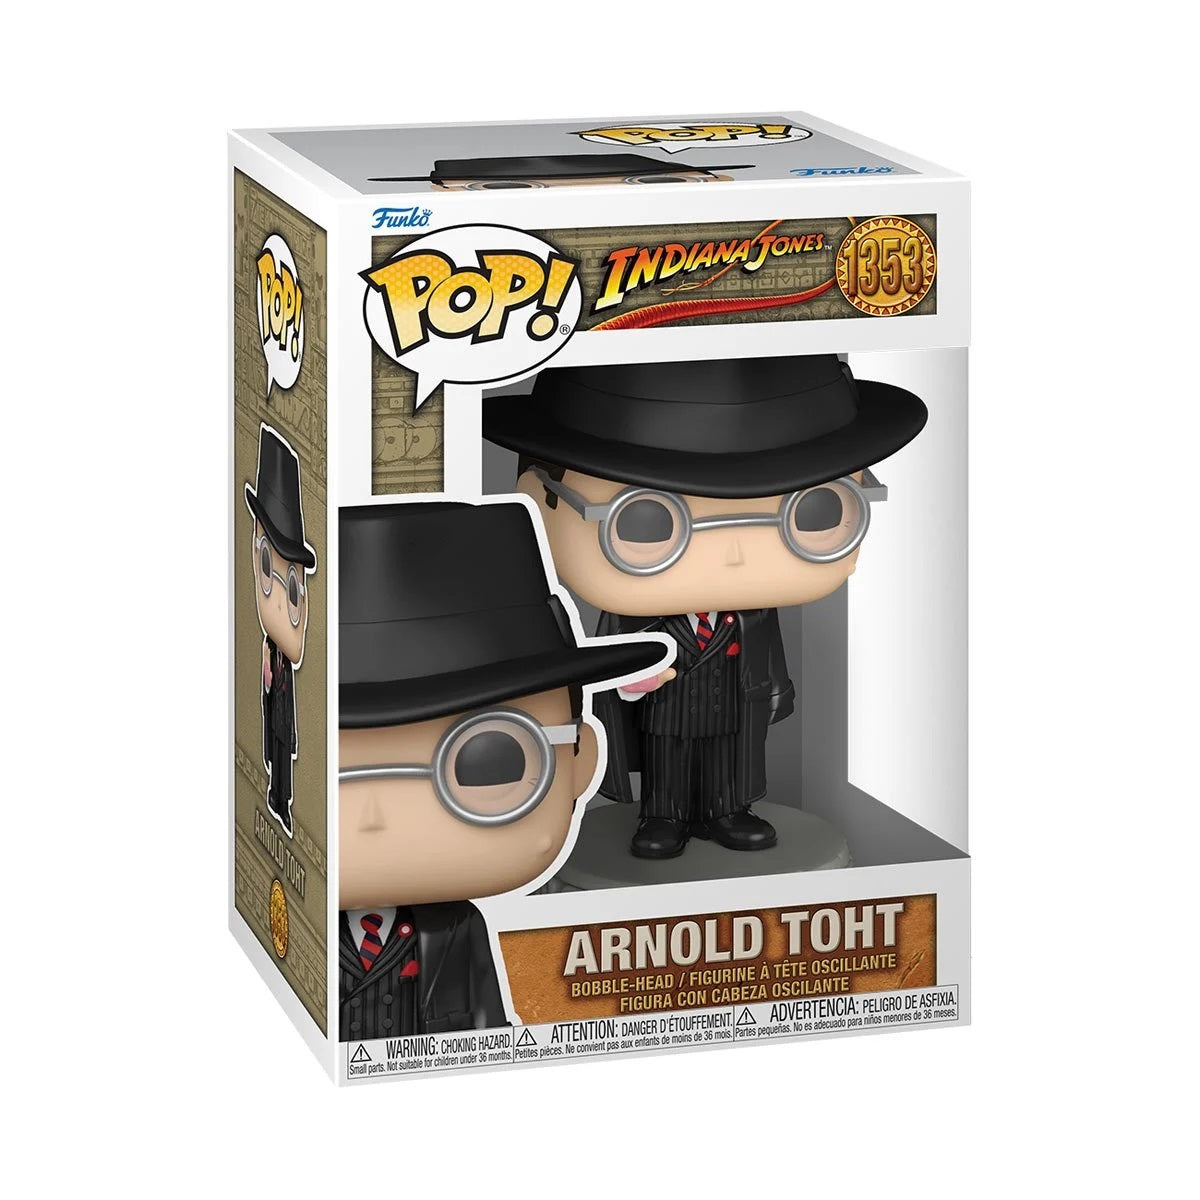 Arnold Toht Pop! Vinyl Figure #1353 - Explore Raiders of the Lost Ark with Indiana Jones